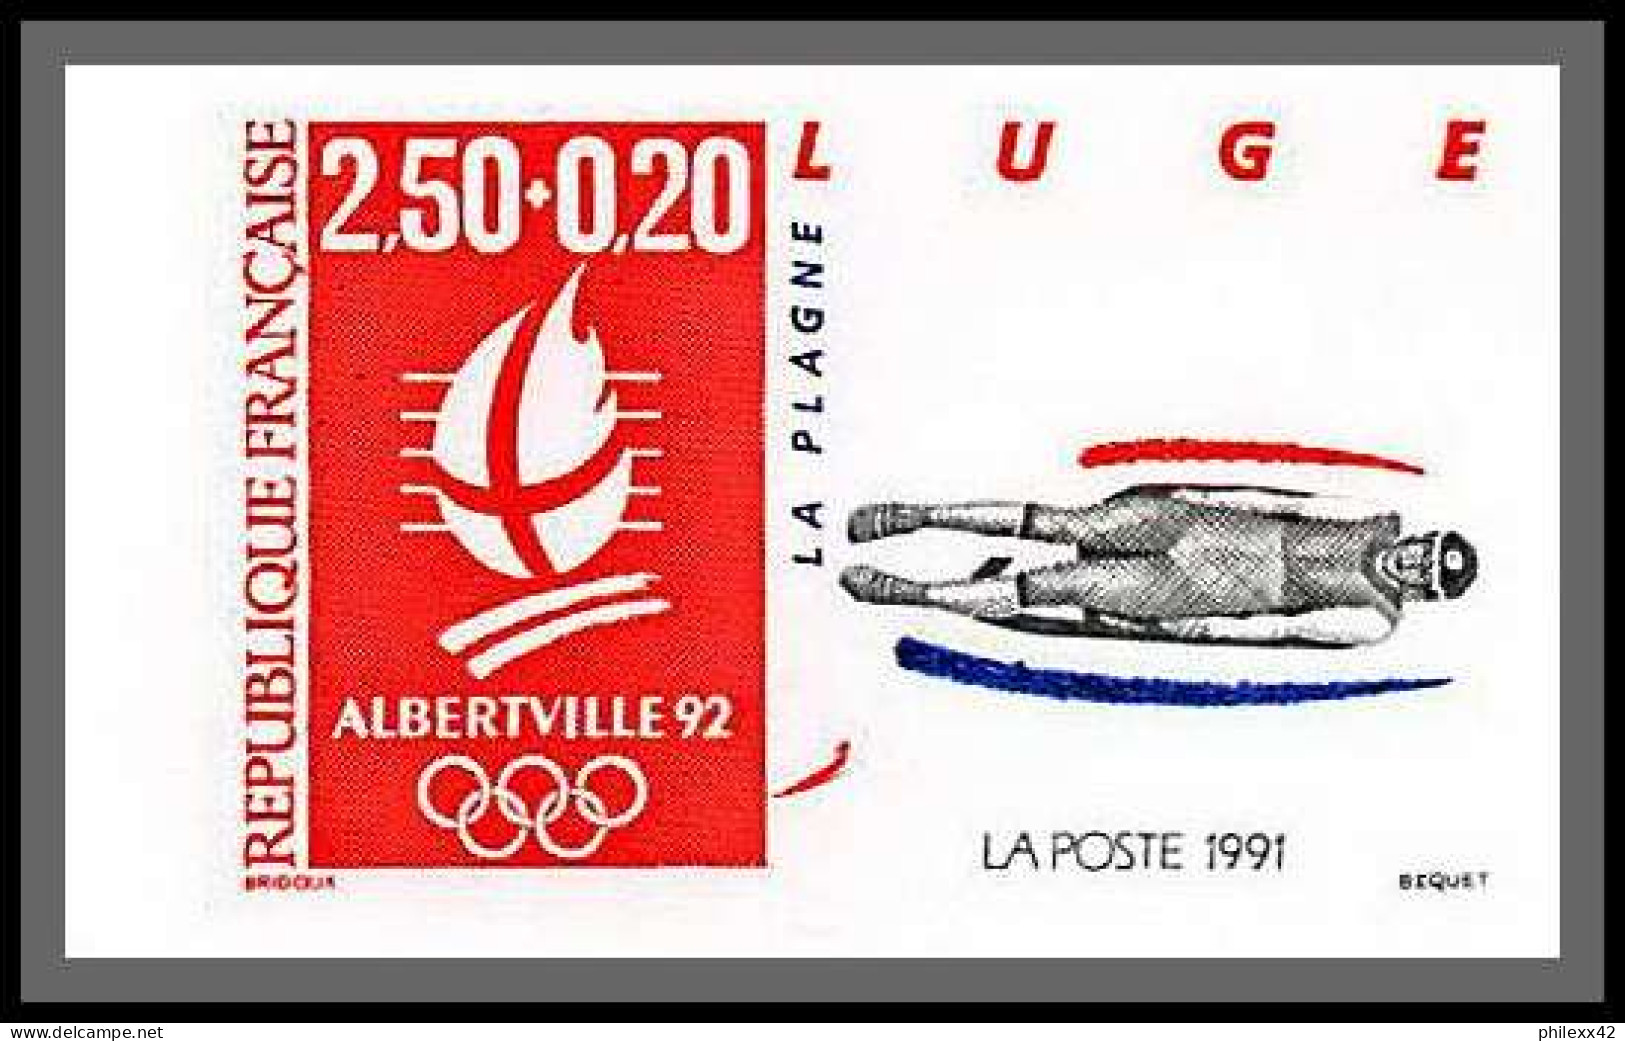 France N°2679-2680 + 2709/2710 + 2737/2742 jeux olympiques (olympic games) albertville 1992 Non dentelé imperf ** MNH